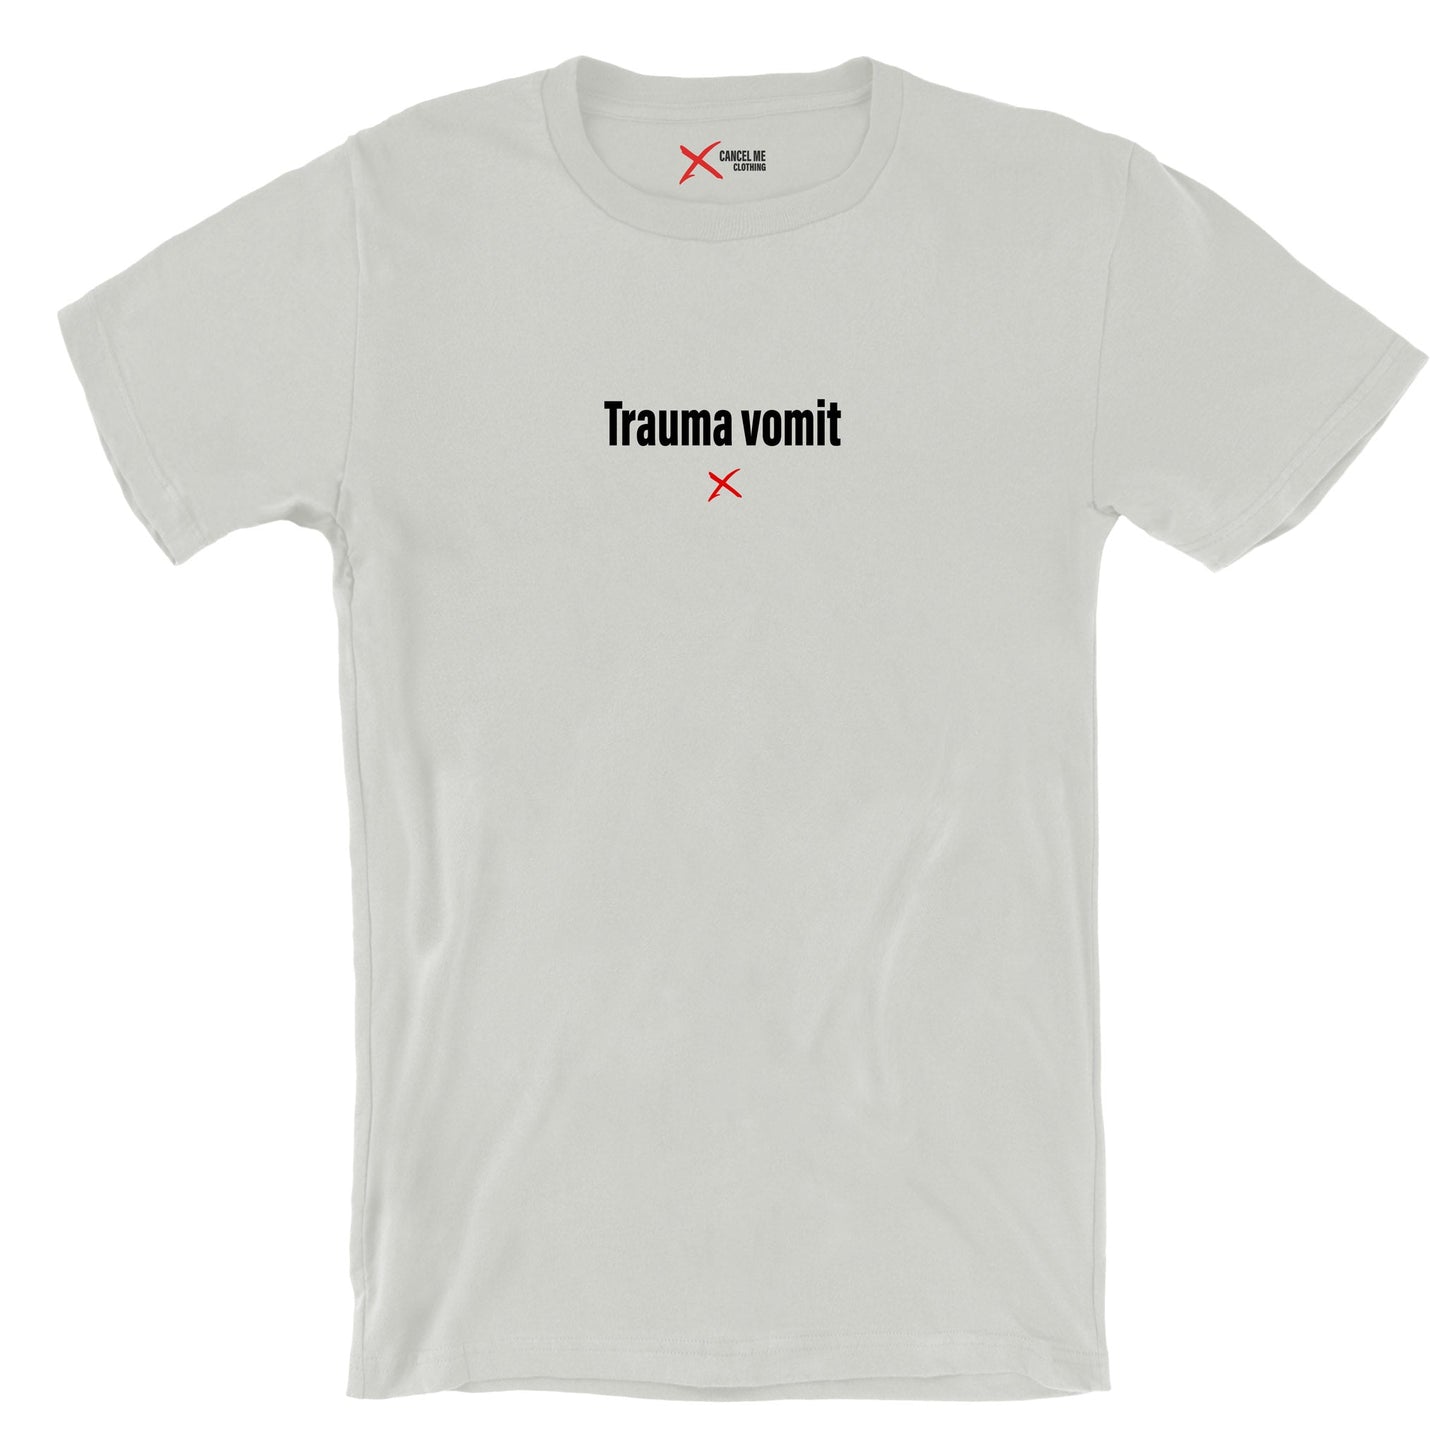 Trauma vomit - Shirt